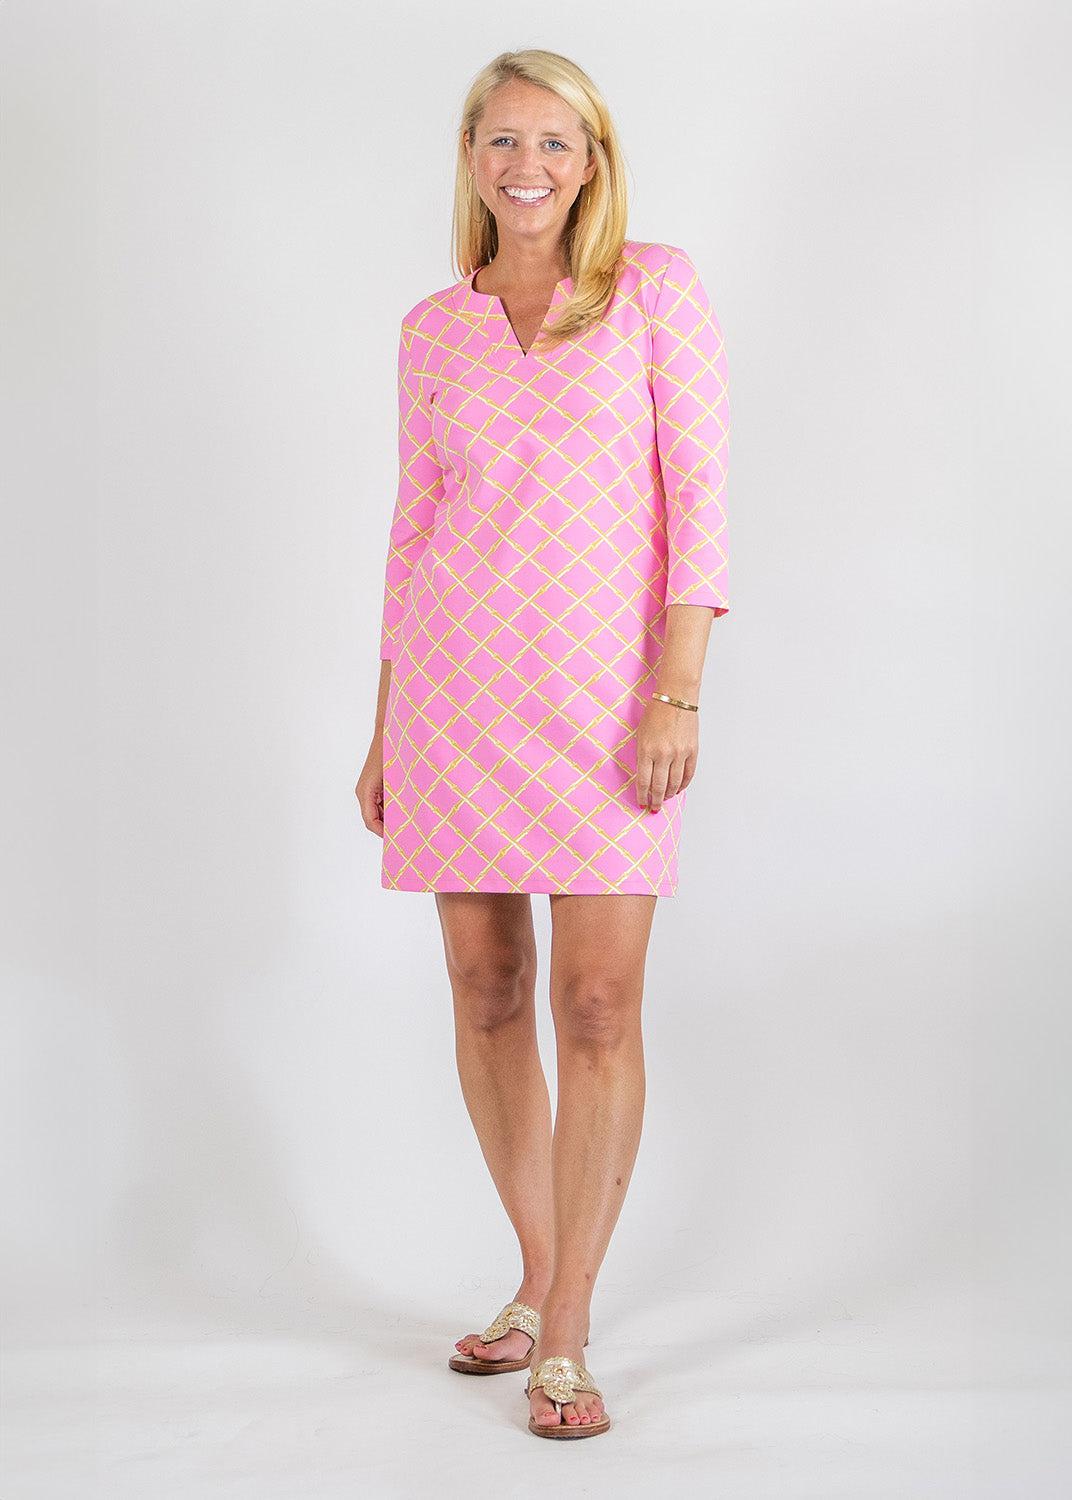 Lucille Dress 3 4 Sleeve Bamboo Lattice Pink Tan